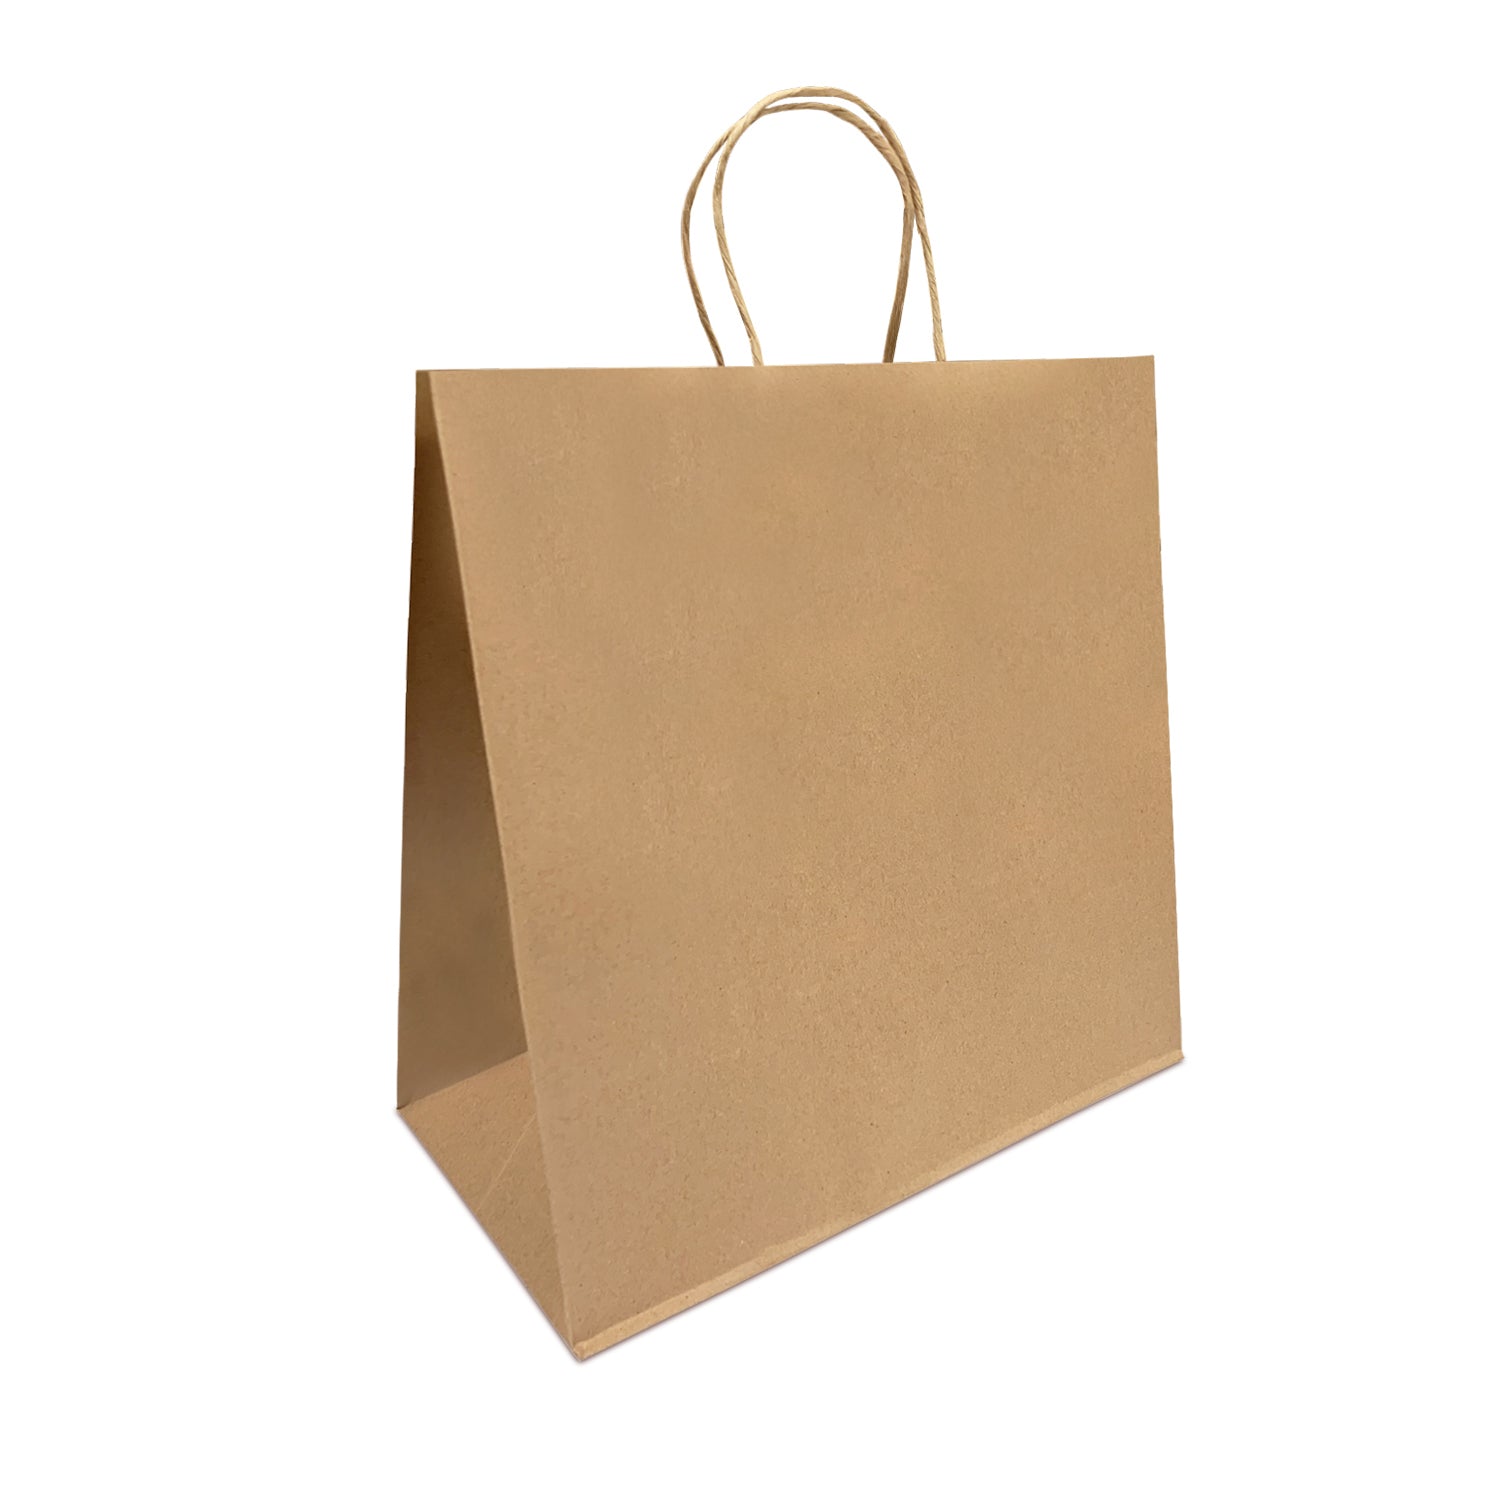 250pcs Star 13x7x13 inches Kraft Paper Bags Twisted Handles; $0.40/bag